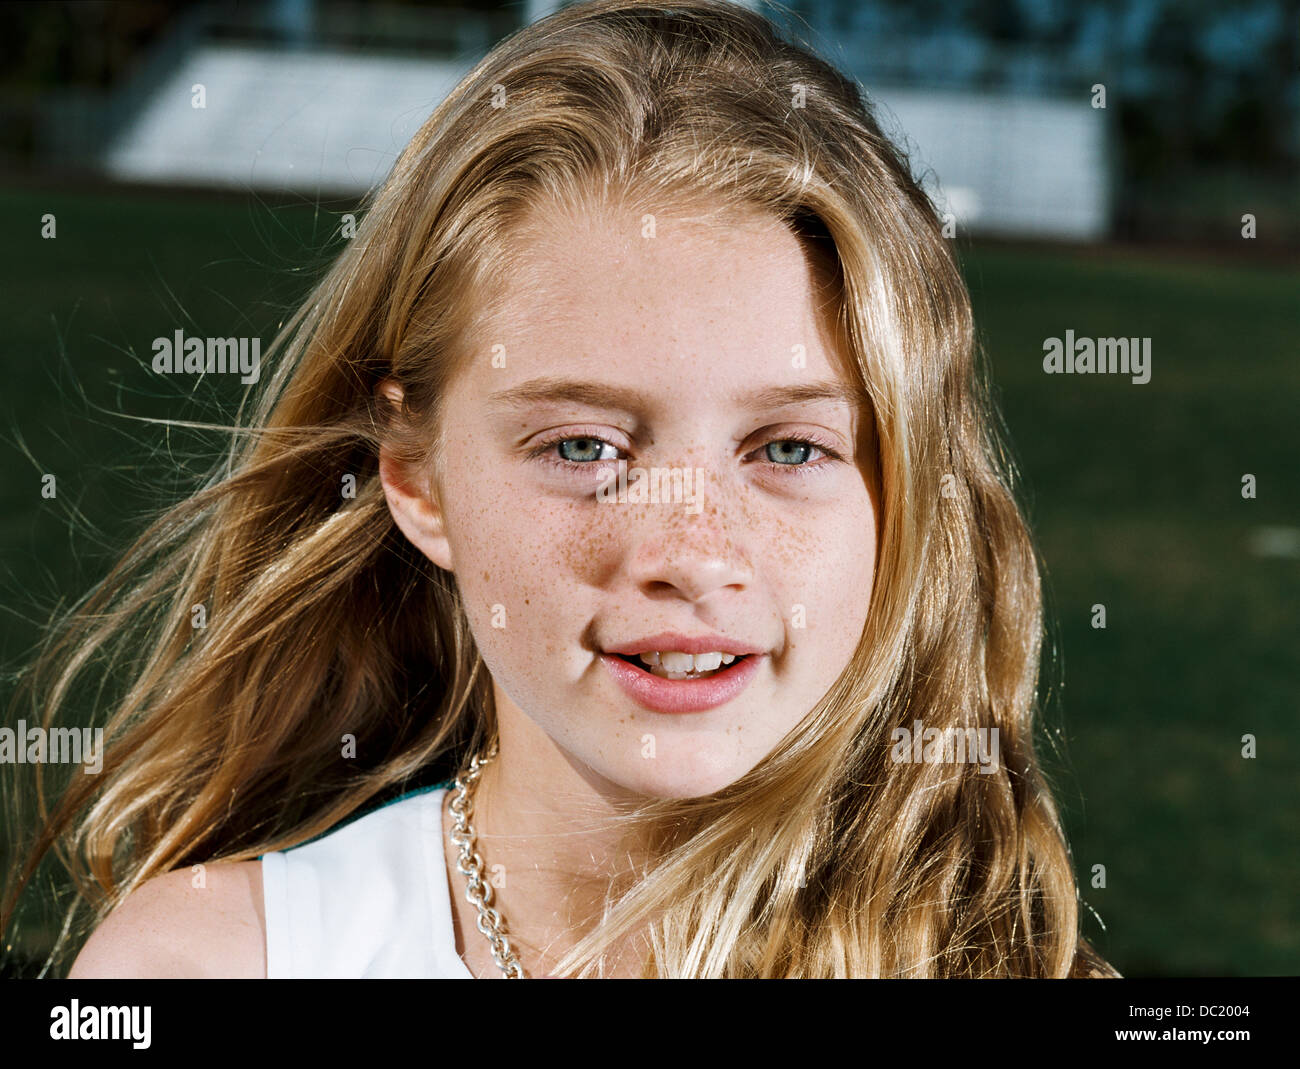 Girl smiling outdoors, portrait Banque D'Images